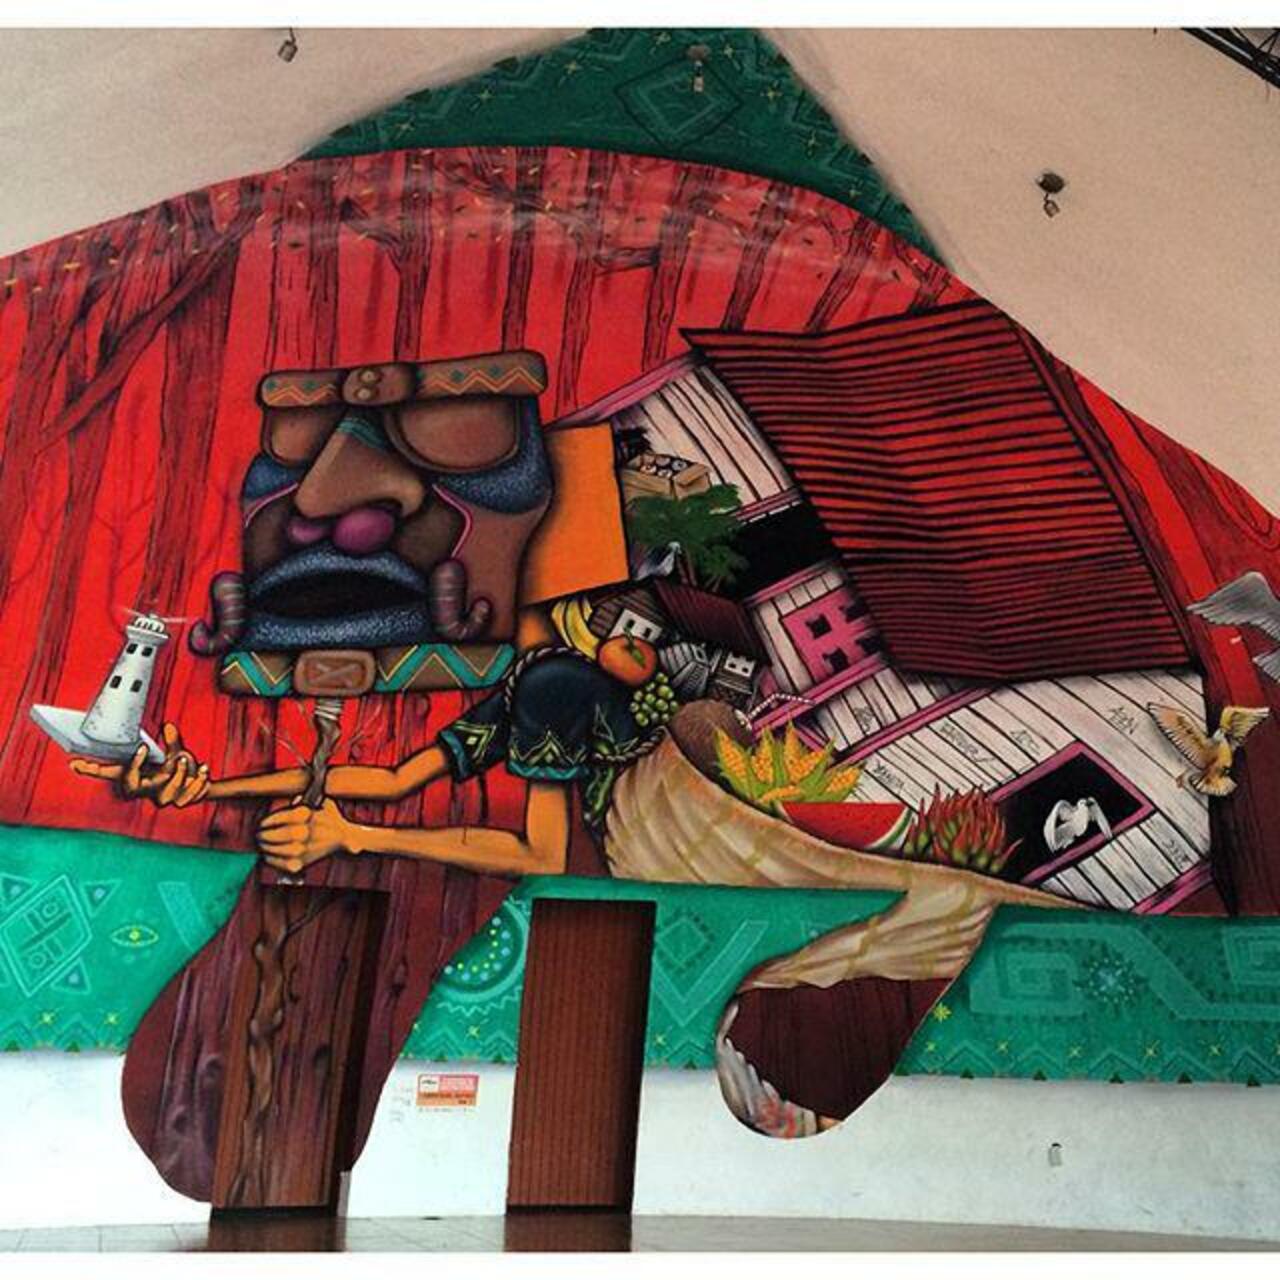 RT @StArtEverywhere: #streetart #arteurbano #urbanart #urban #art #mexico #cdmx #mexicodf #mural #graffiti #streetartmexico #urbanwalls … http://t.co/6QjZlGD8va